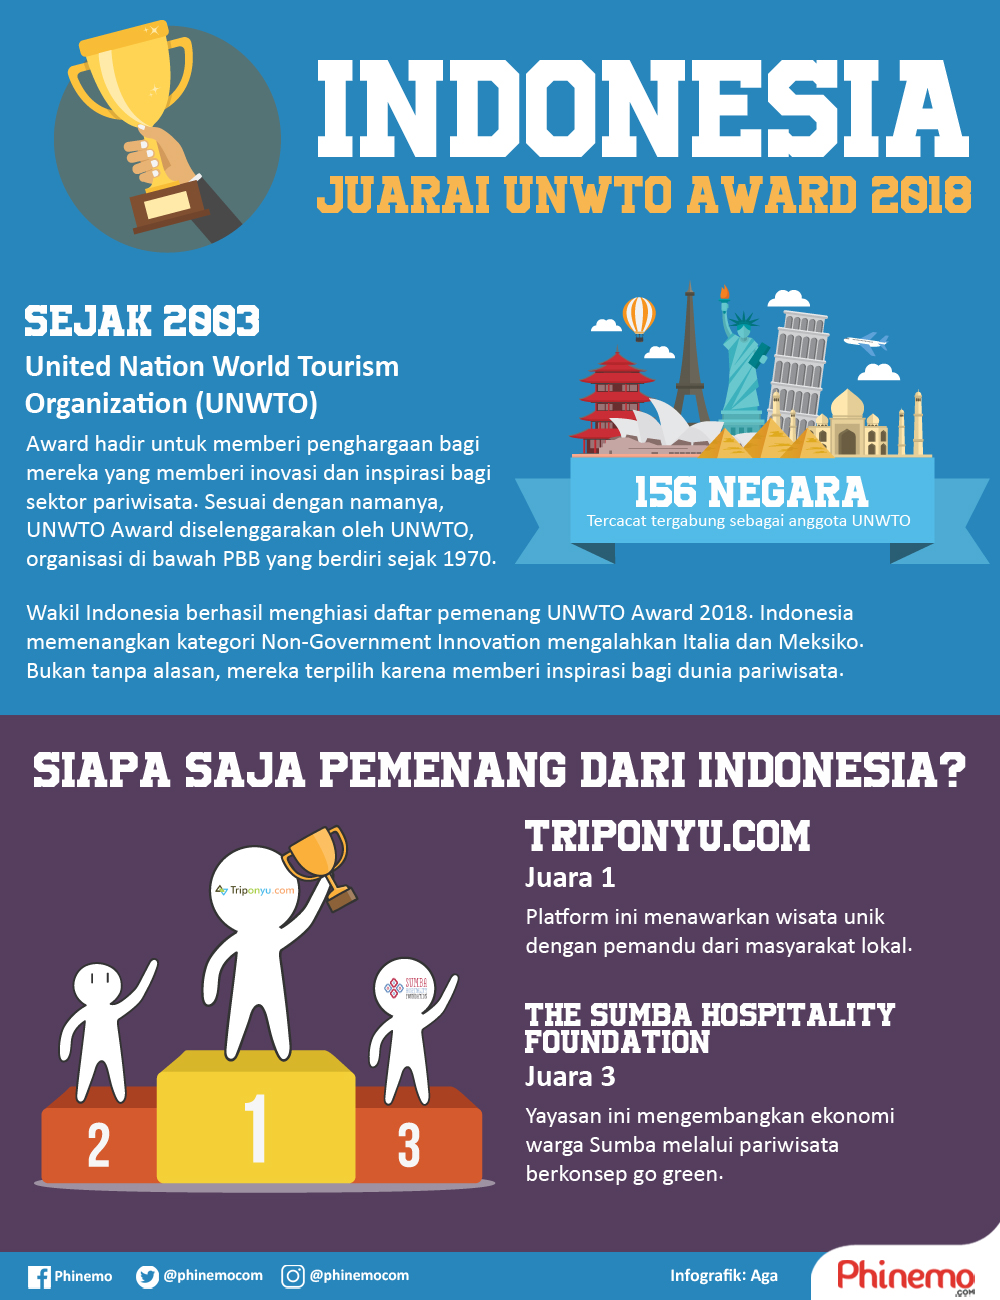 startup indonesia